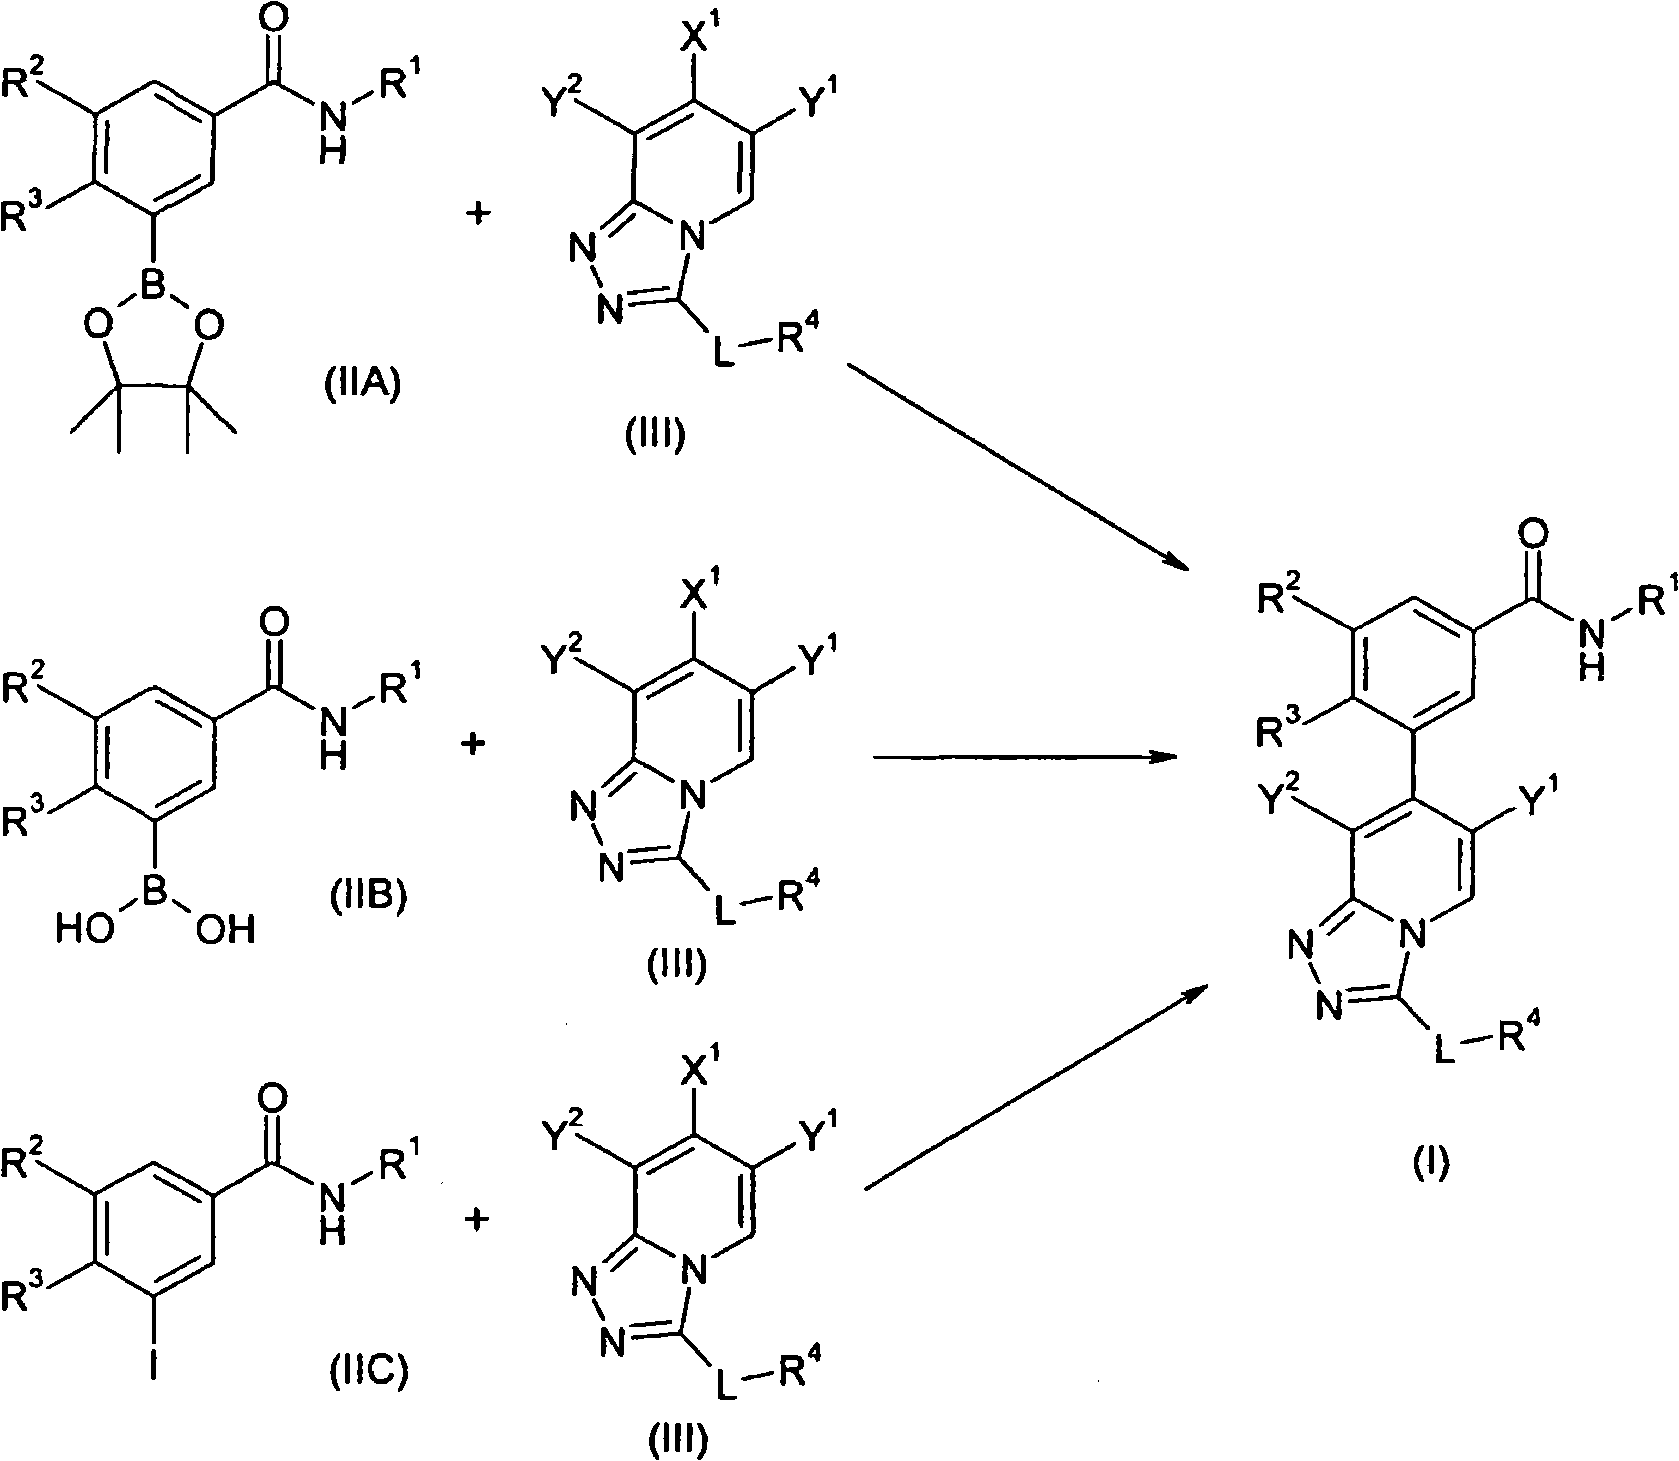 New 3-([1,2,4]triazolo[4,3-a]pyridin-7-yl)benzamide derivatives